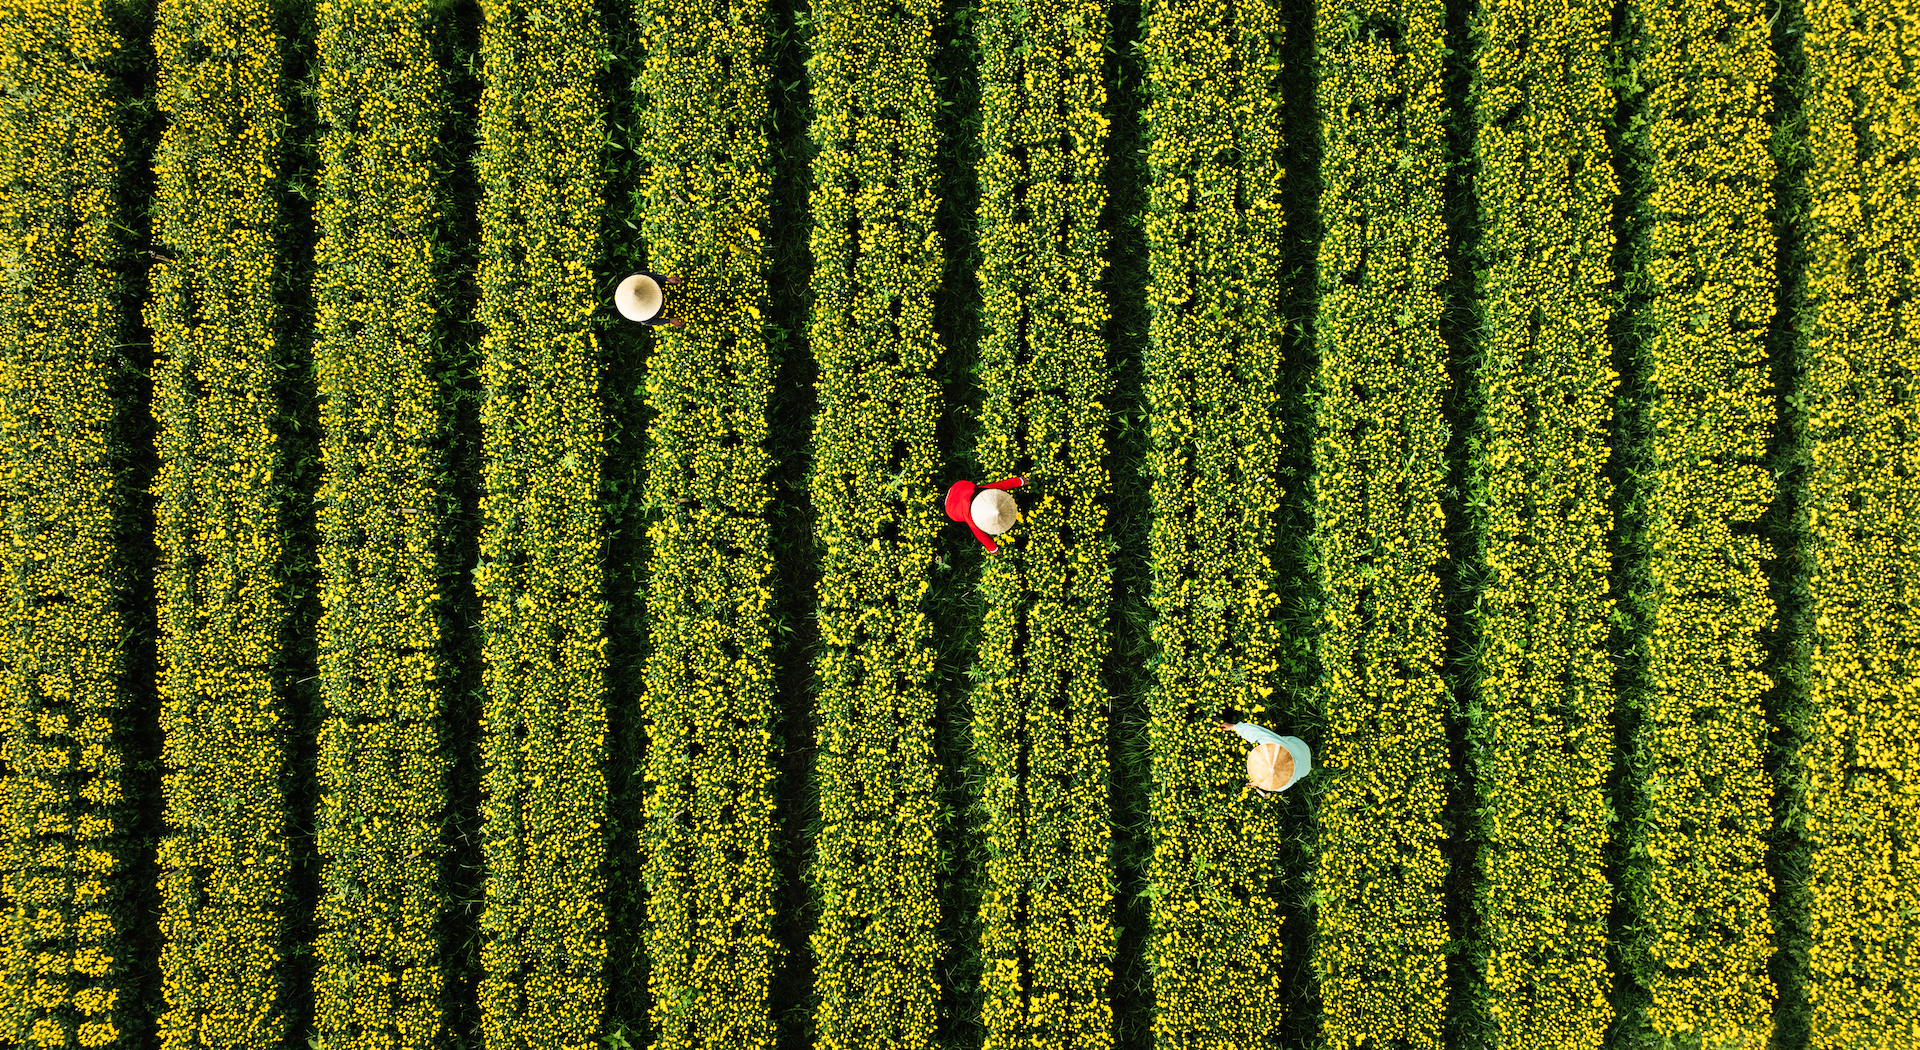 Farmers takes care of Tet flowers on a field in the southern region of Vietnam. Photo: Jet Anthony De La Cruz